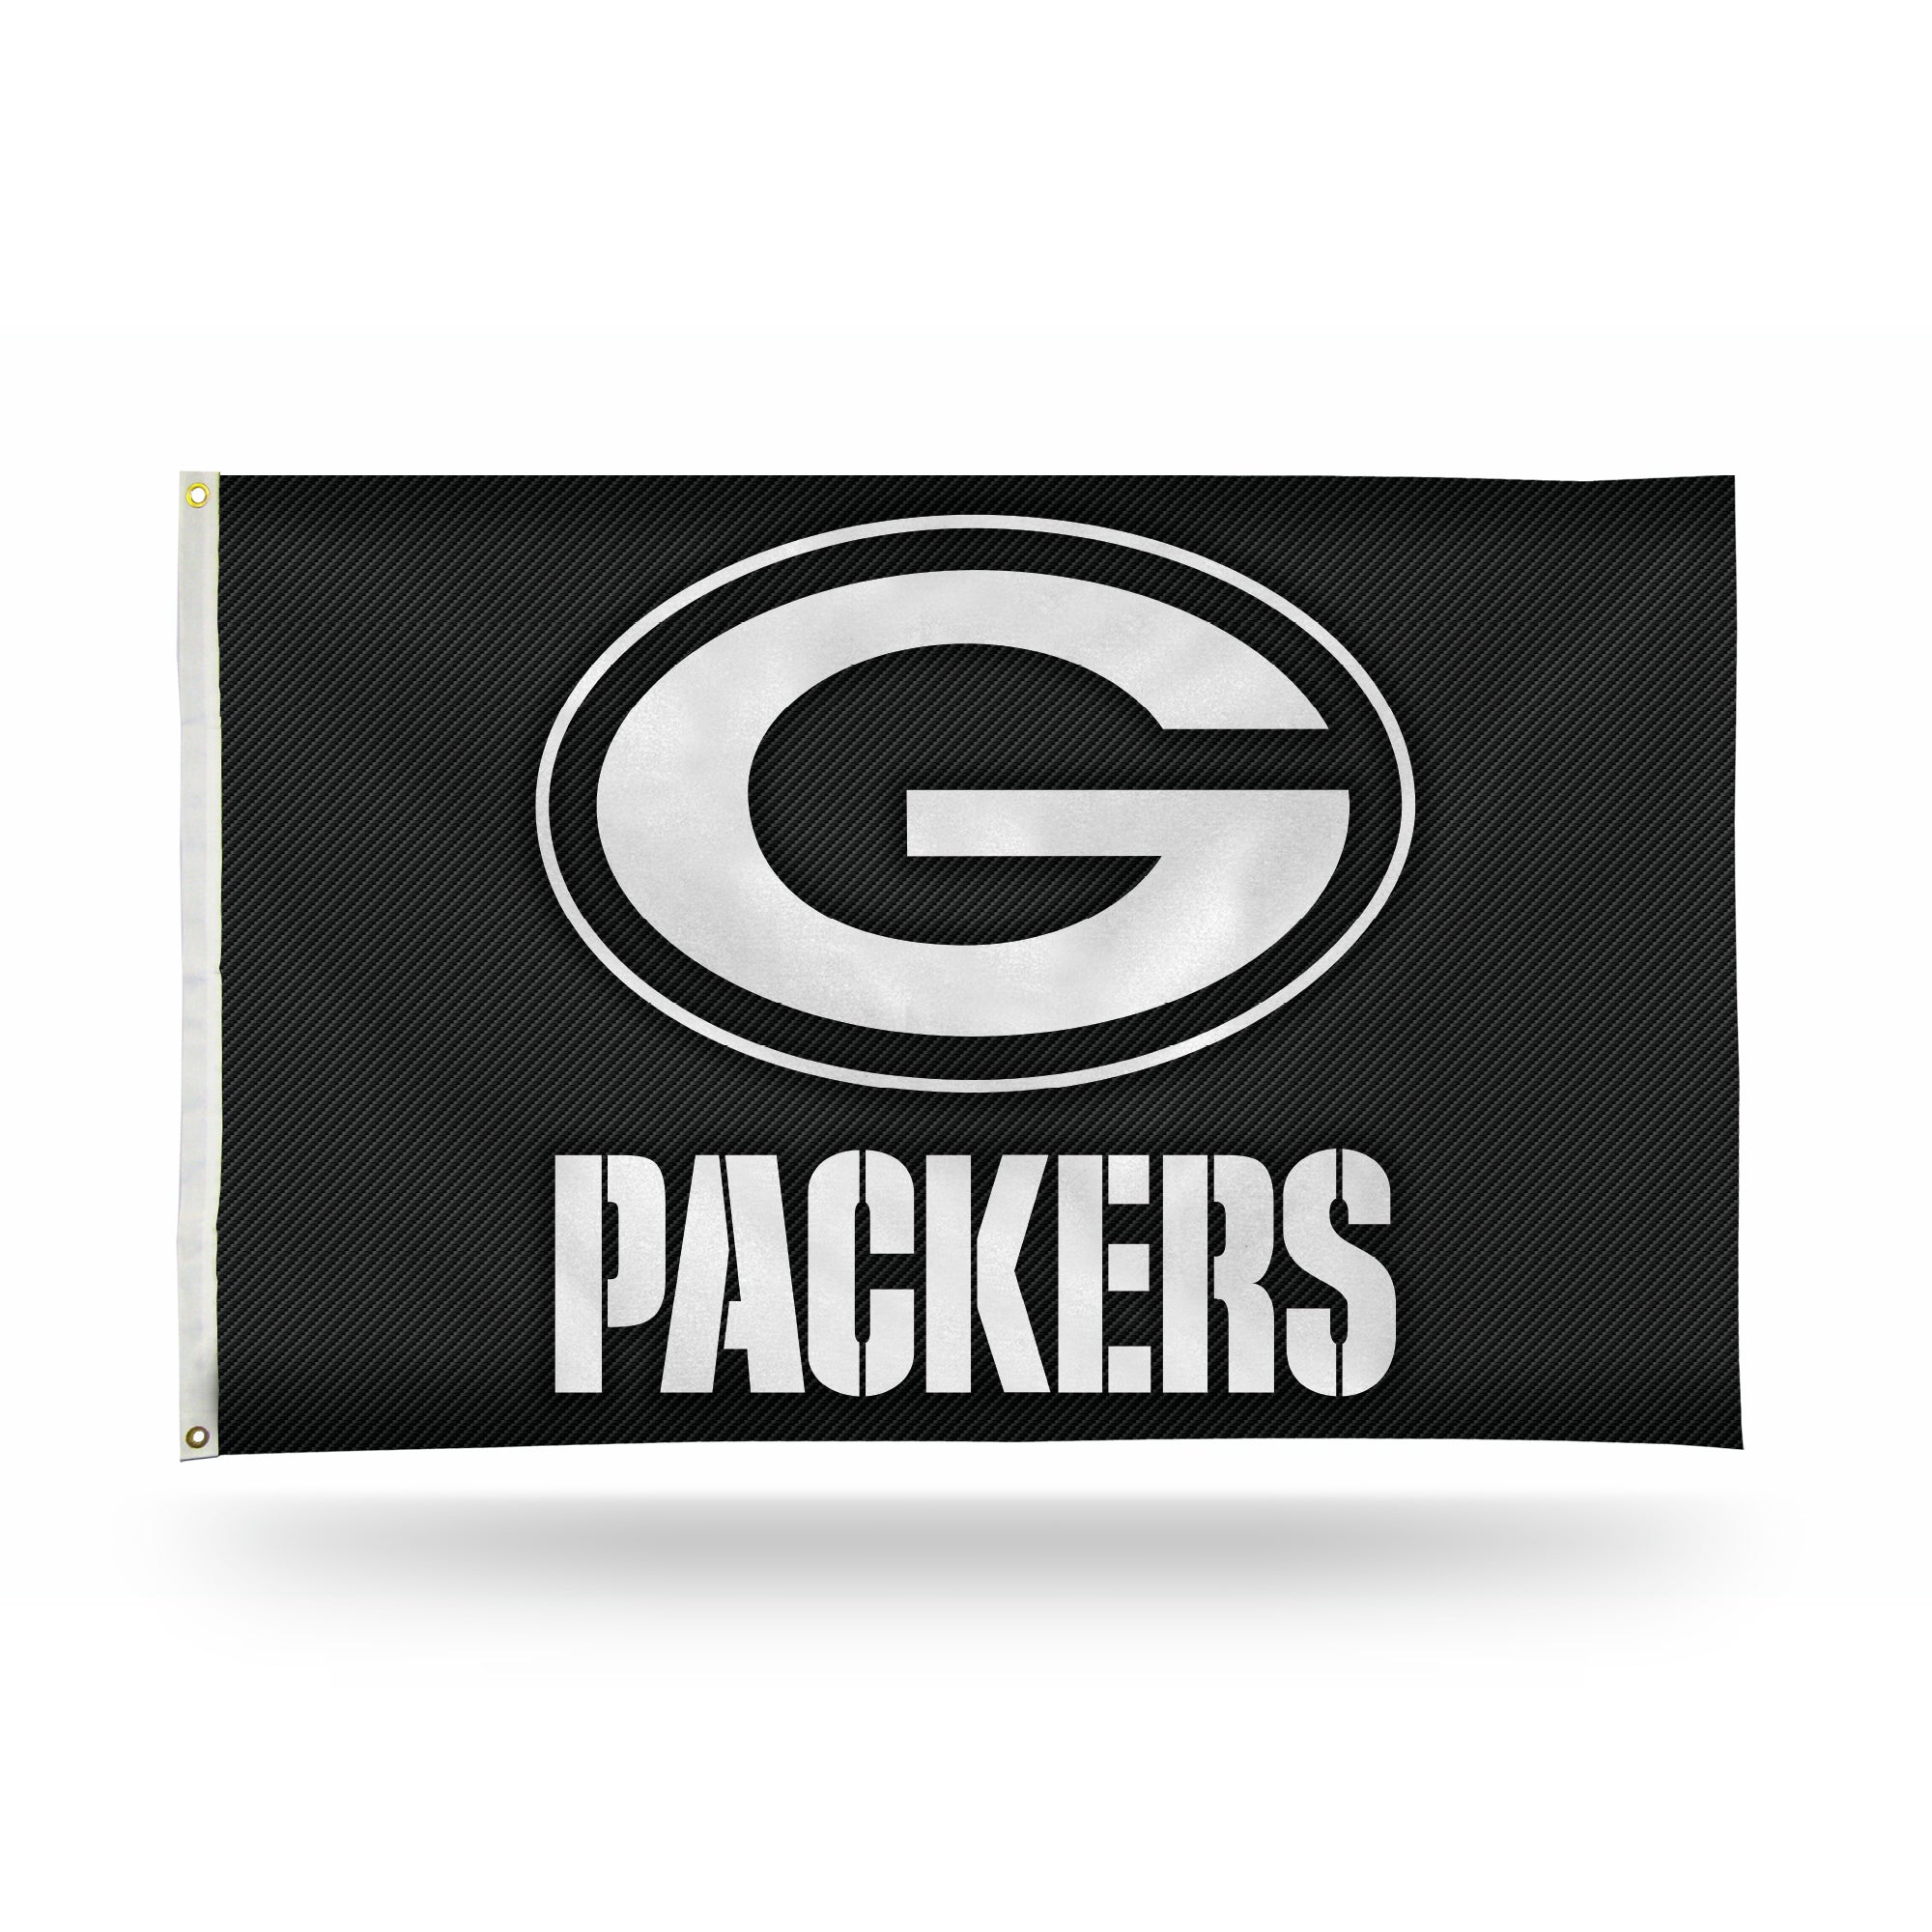 Green Bay Packers 3x5 Premium Banner Flag - Carbon Fiber Design